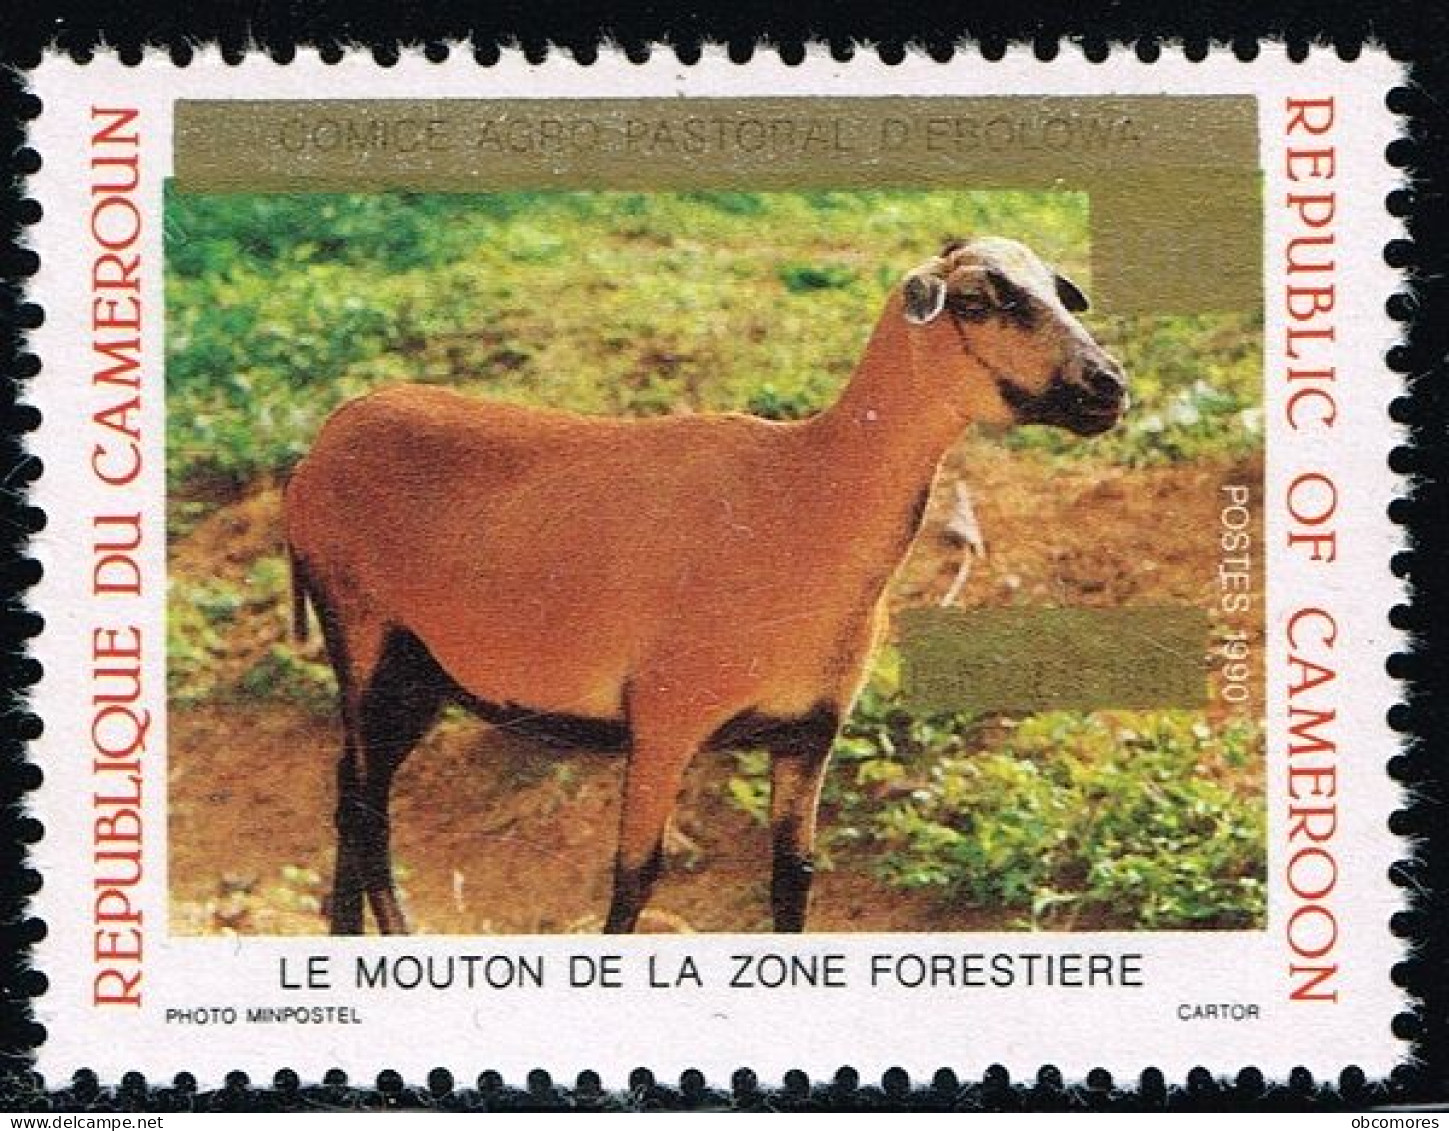 CAMEROUN Cameroon Kamerun 1993 Mouton Sheep Mi 1199 Sc 895 Overprint But Without New Value 125 F! RARE - MNH ** - Kameroen (1960-...)